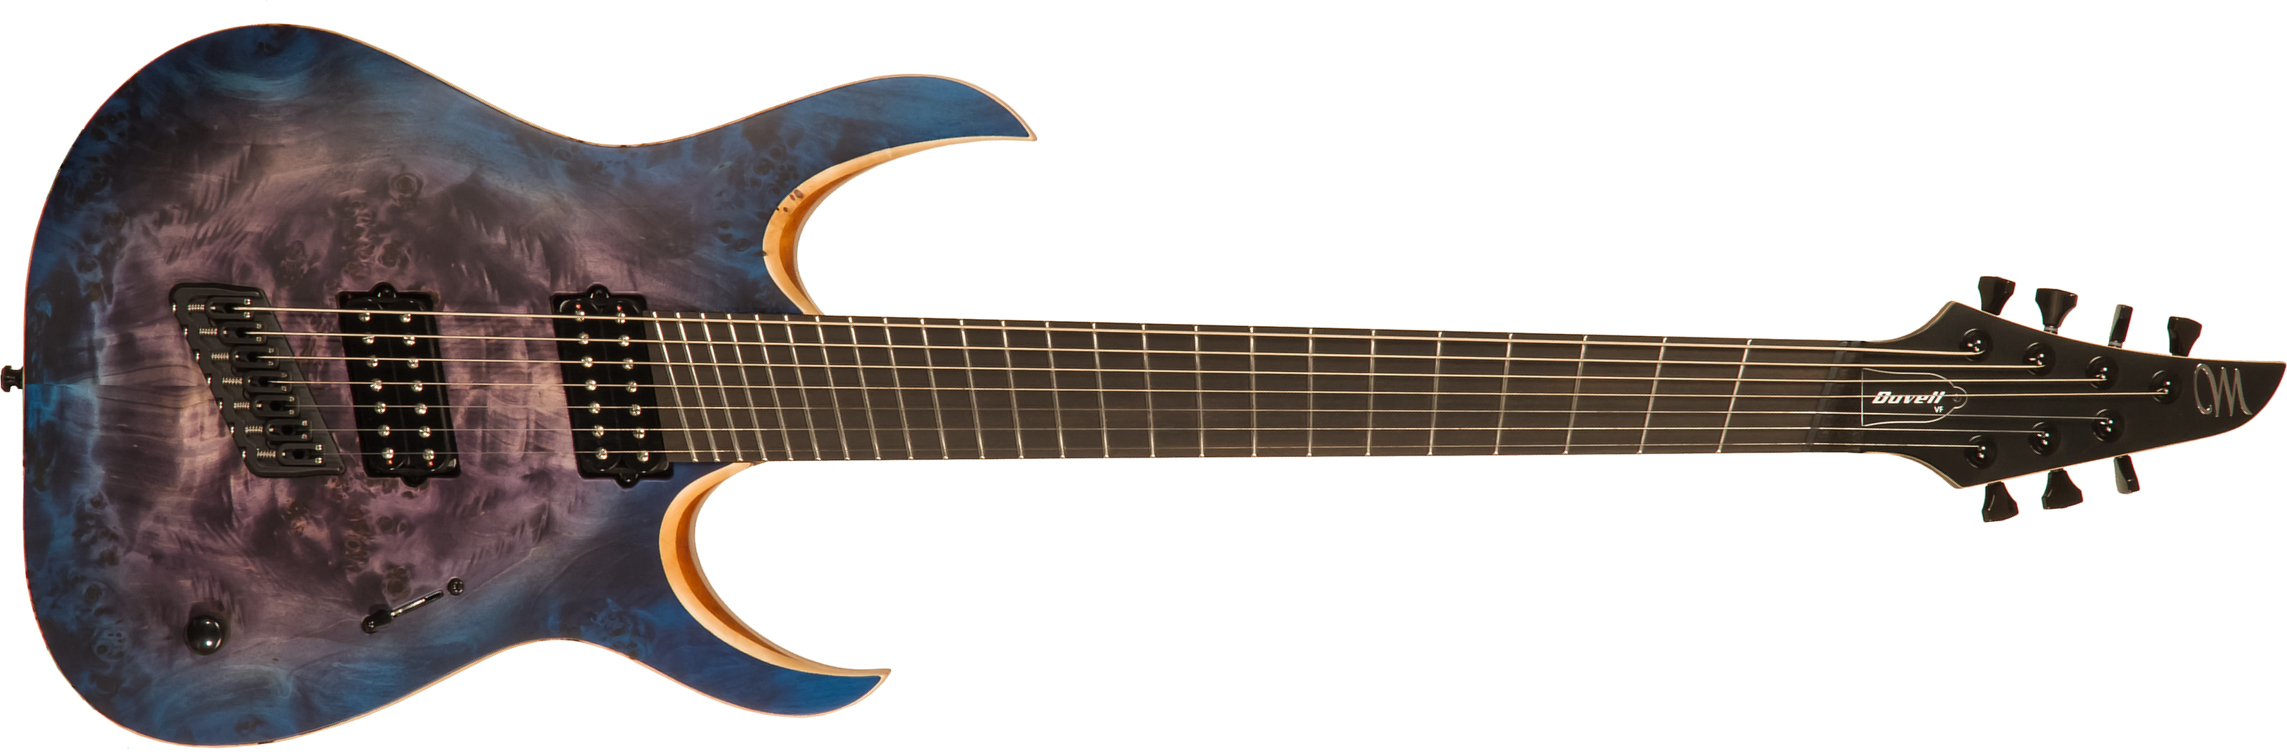 Mayones Guitars Duvell Elite V-frets 7c Hh Bare Knuckle Ht Eb - Jeans Black 3-tone Blue Burst Satin - Multi-scale gitaar - Main picture